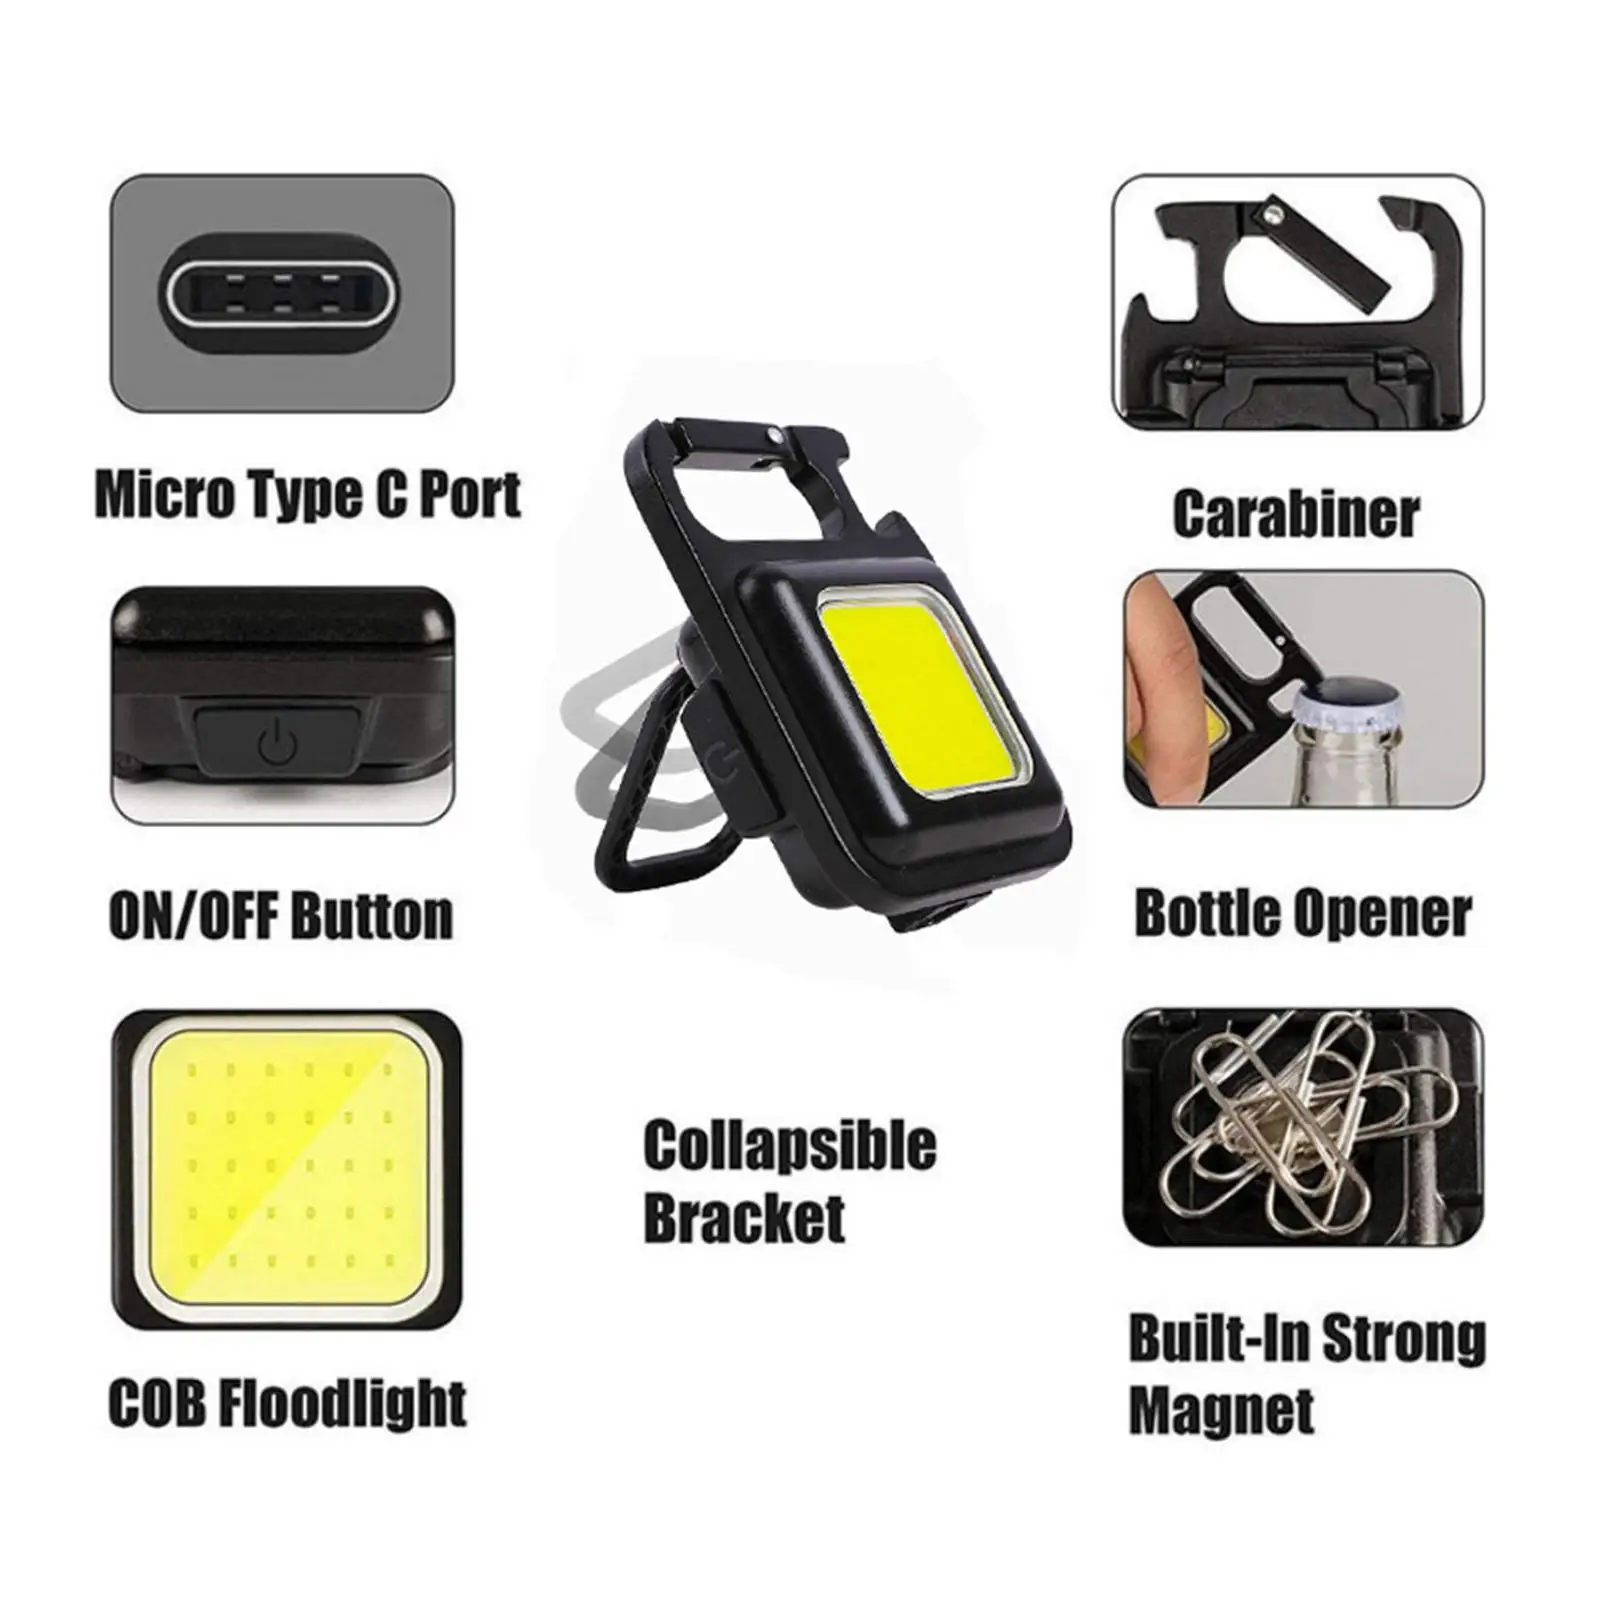 Lights Mechanic Light 800 Lumens 4 Light Modes Bottle Opener COB Keychain flashlights for Outdoor Night Fishing